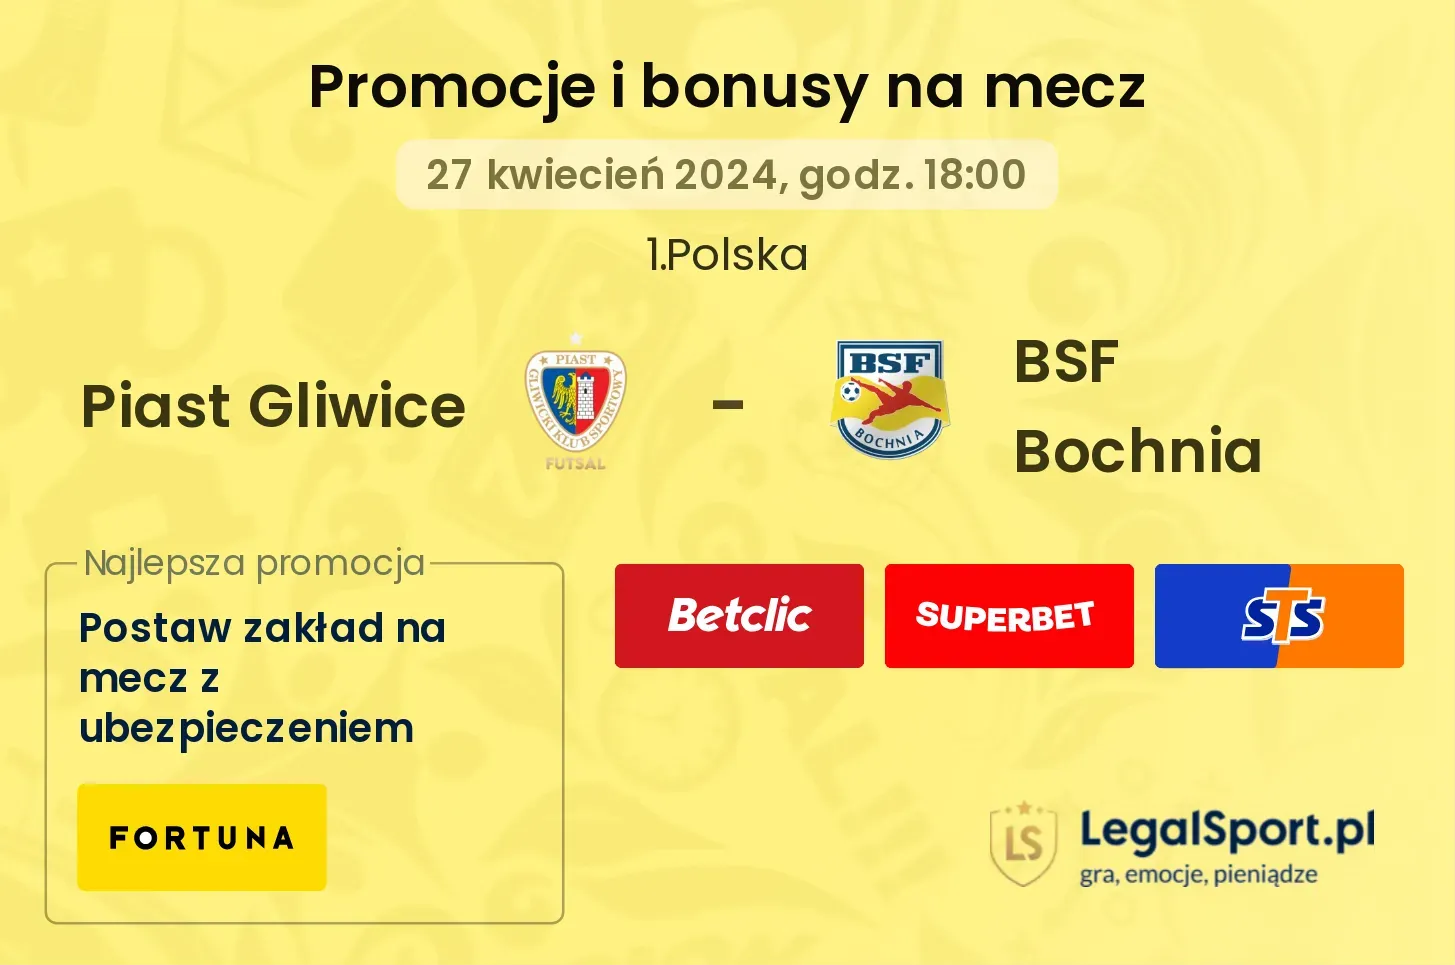 Piast Gliwice - BSF Bochnia promocje bonusy na mecz